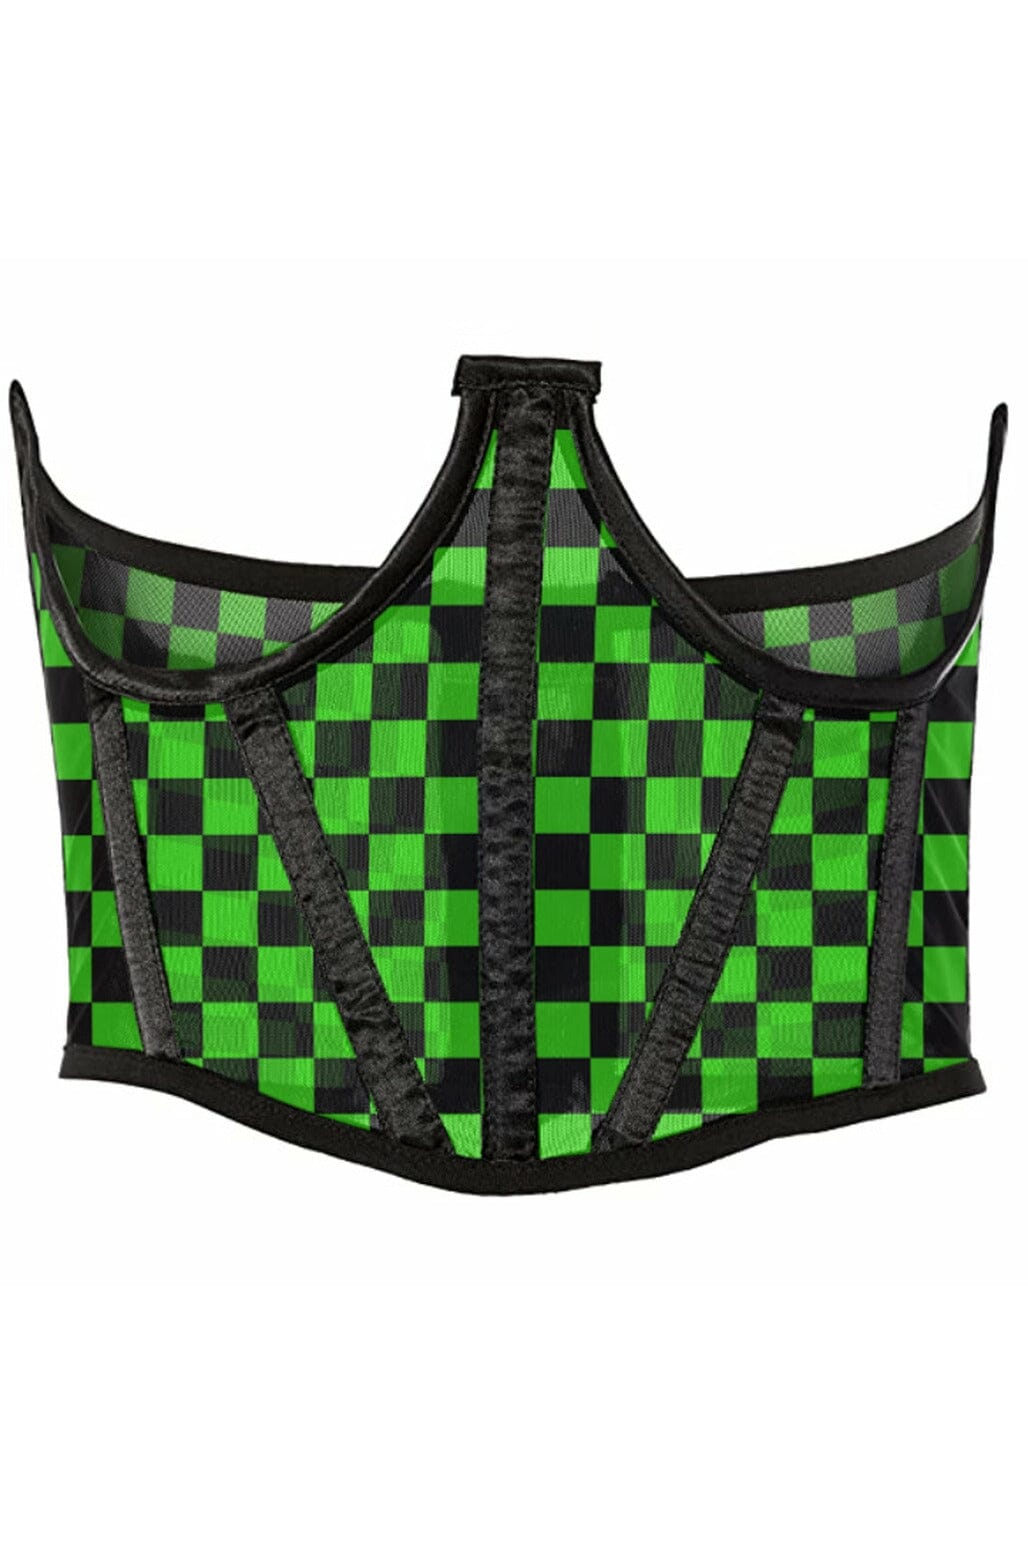 Lavish Neon Green/Black Checker Print Mesh Open Cup Waist Cincher-Waist Cinchers-Daisy Corsets-Neon-S-SEXYSHOES.COM